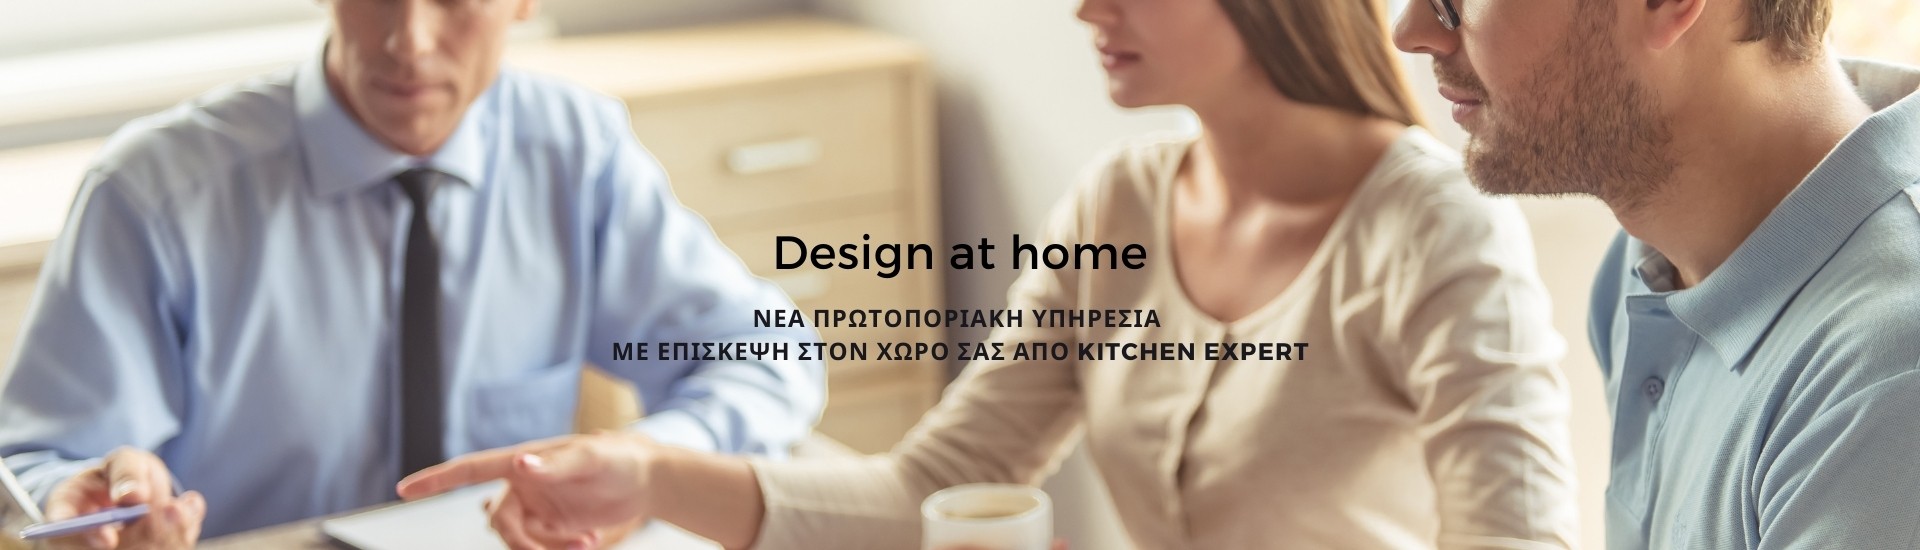 Design at home